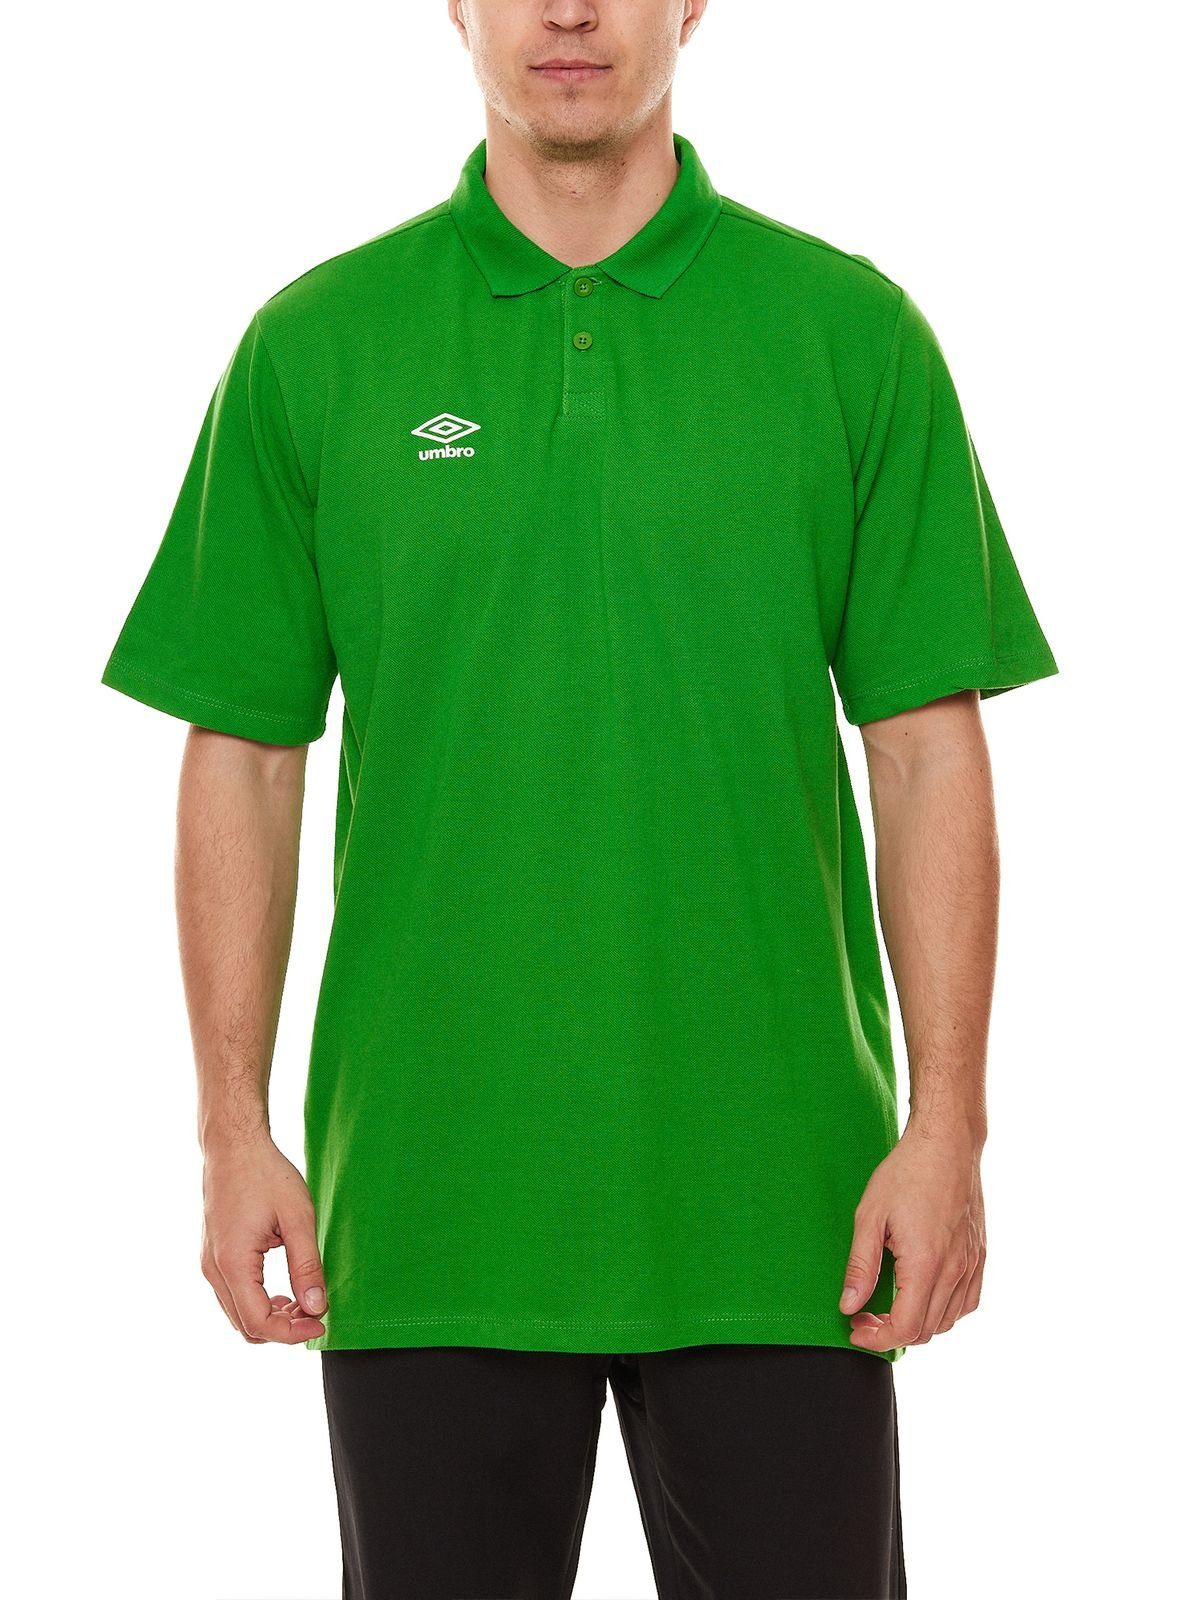 Umbro Rundhalsshirt umbro Club Polohemd Herren modisches Essential Polo-Shirt UMTM0323-065 Grün Golf-Shirt